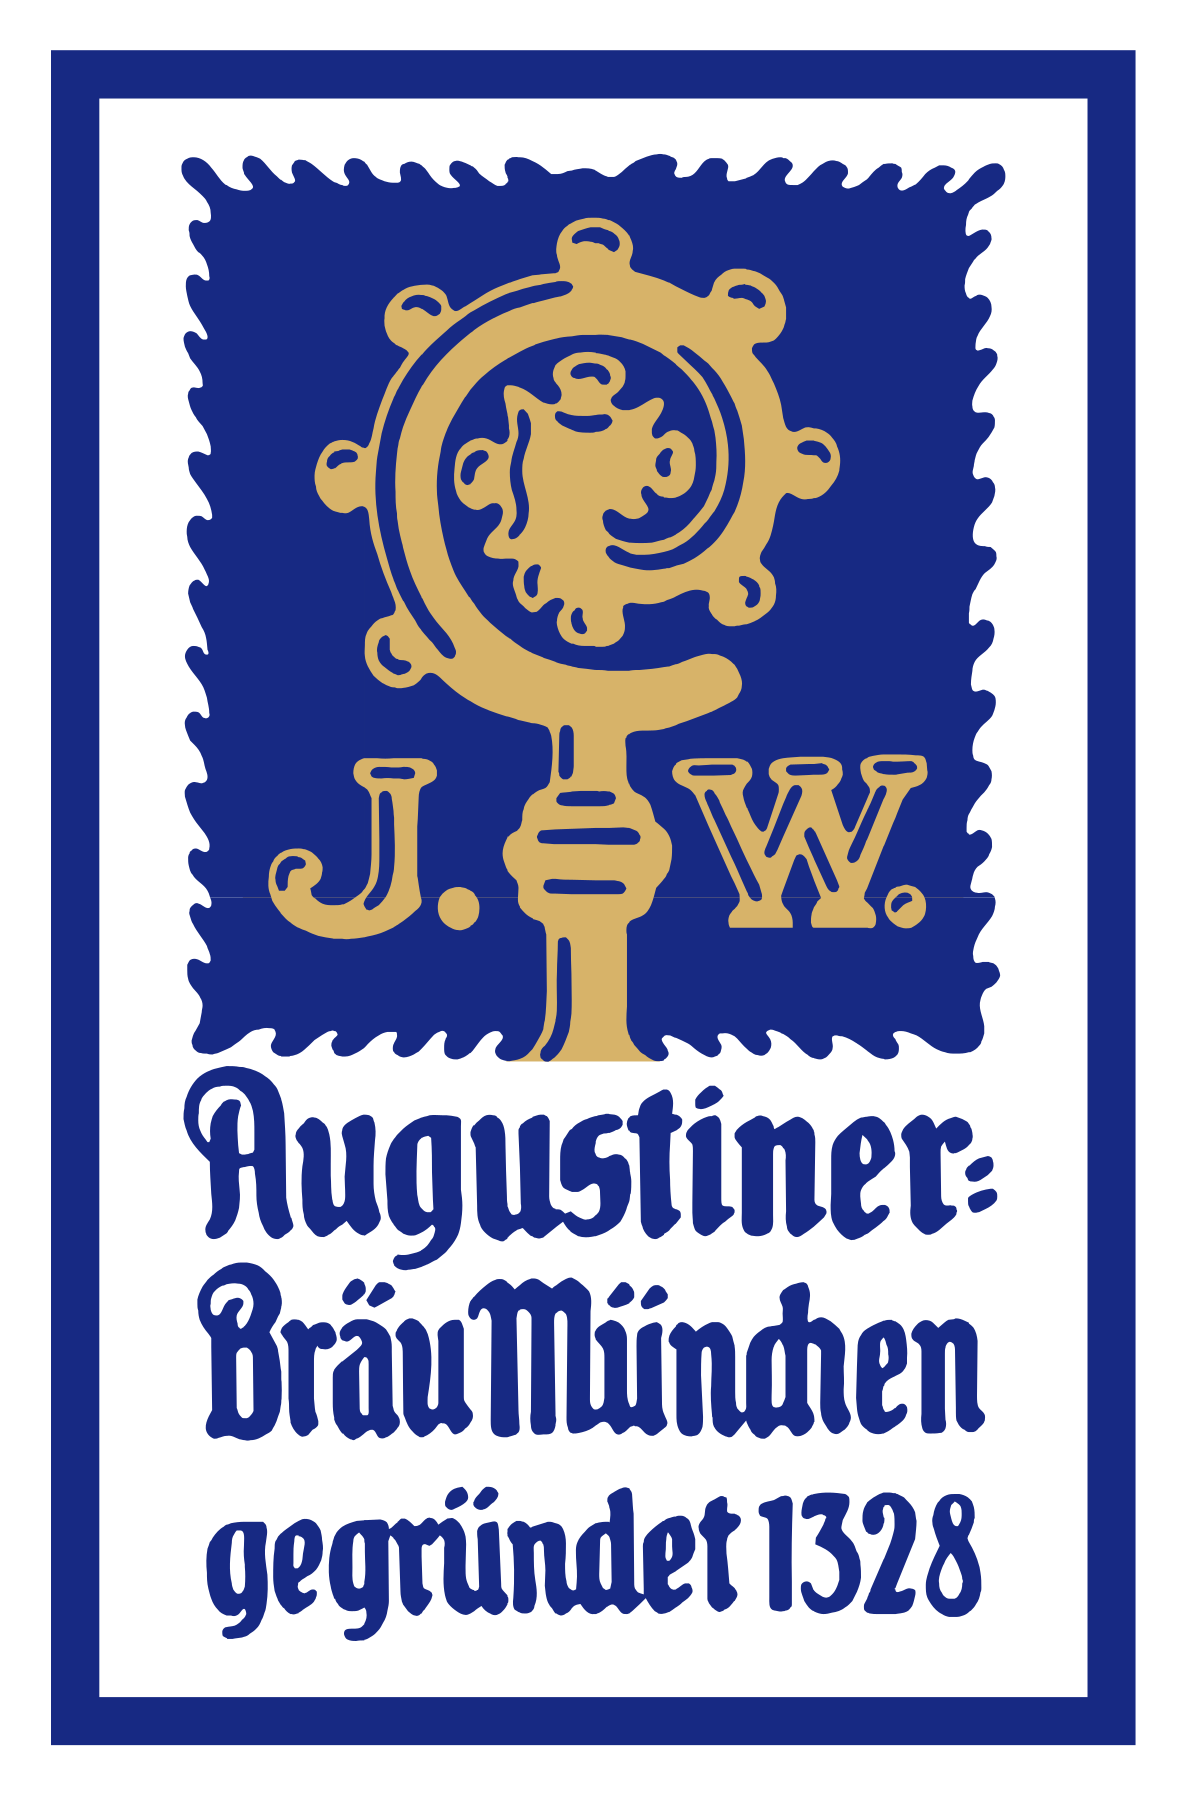 Augustiner-Bräu